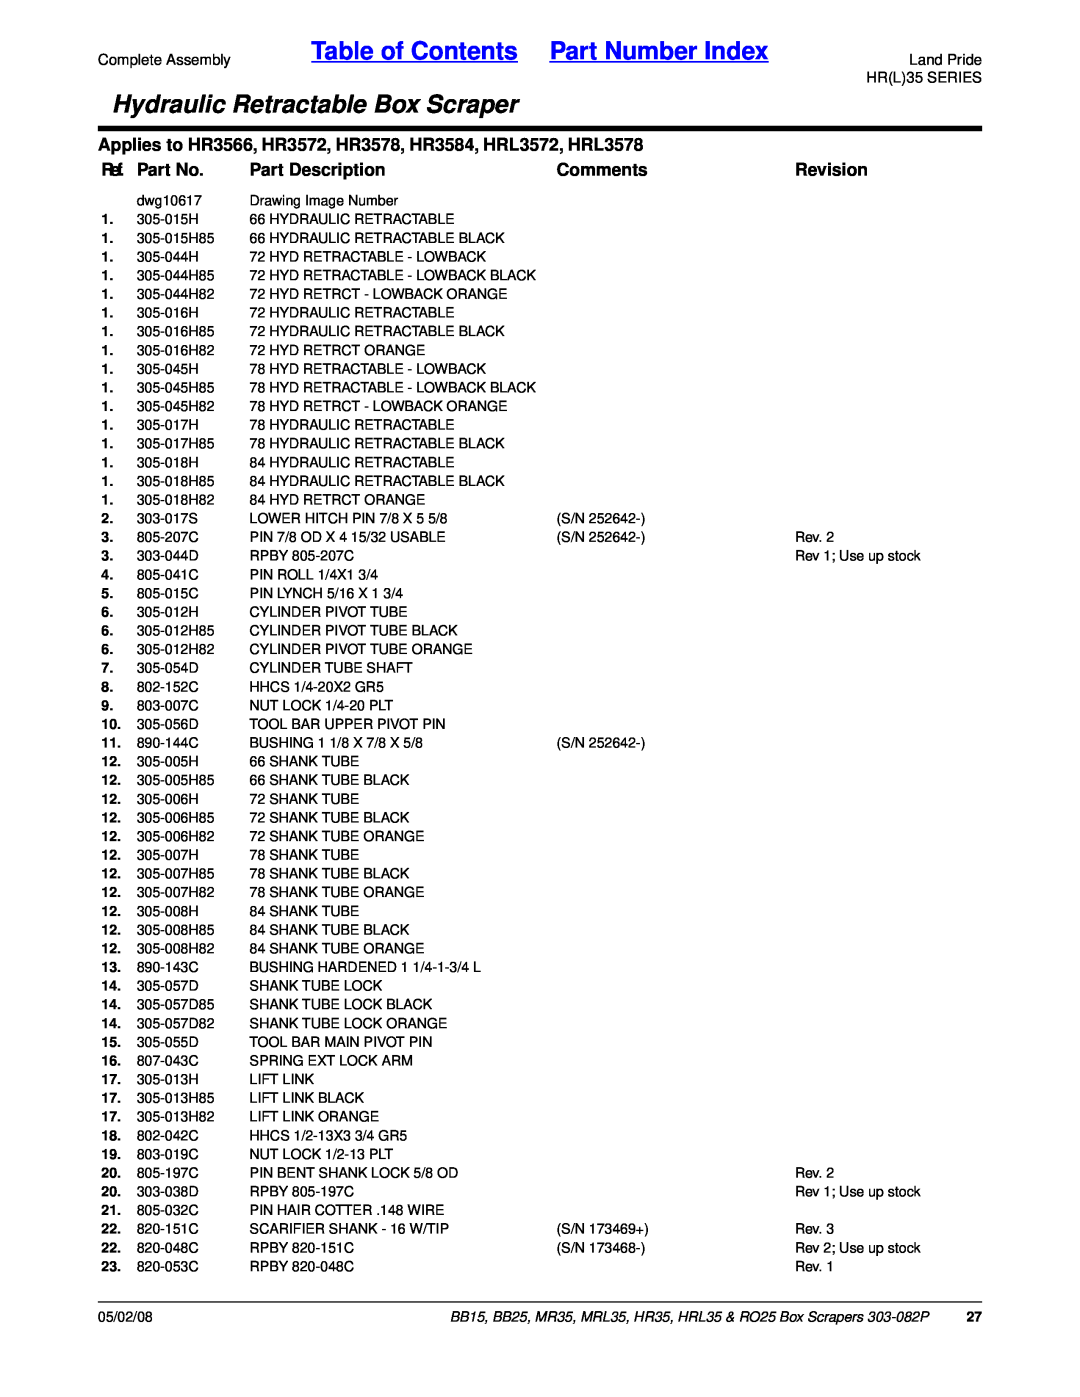 Land Pride HRL35 Table of Contents Part Number Index, Hydraulic Retractable Box Scraper, Ref. Part No, Part Description 